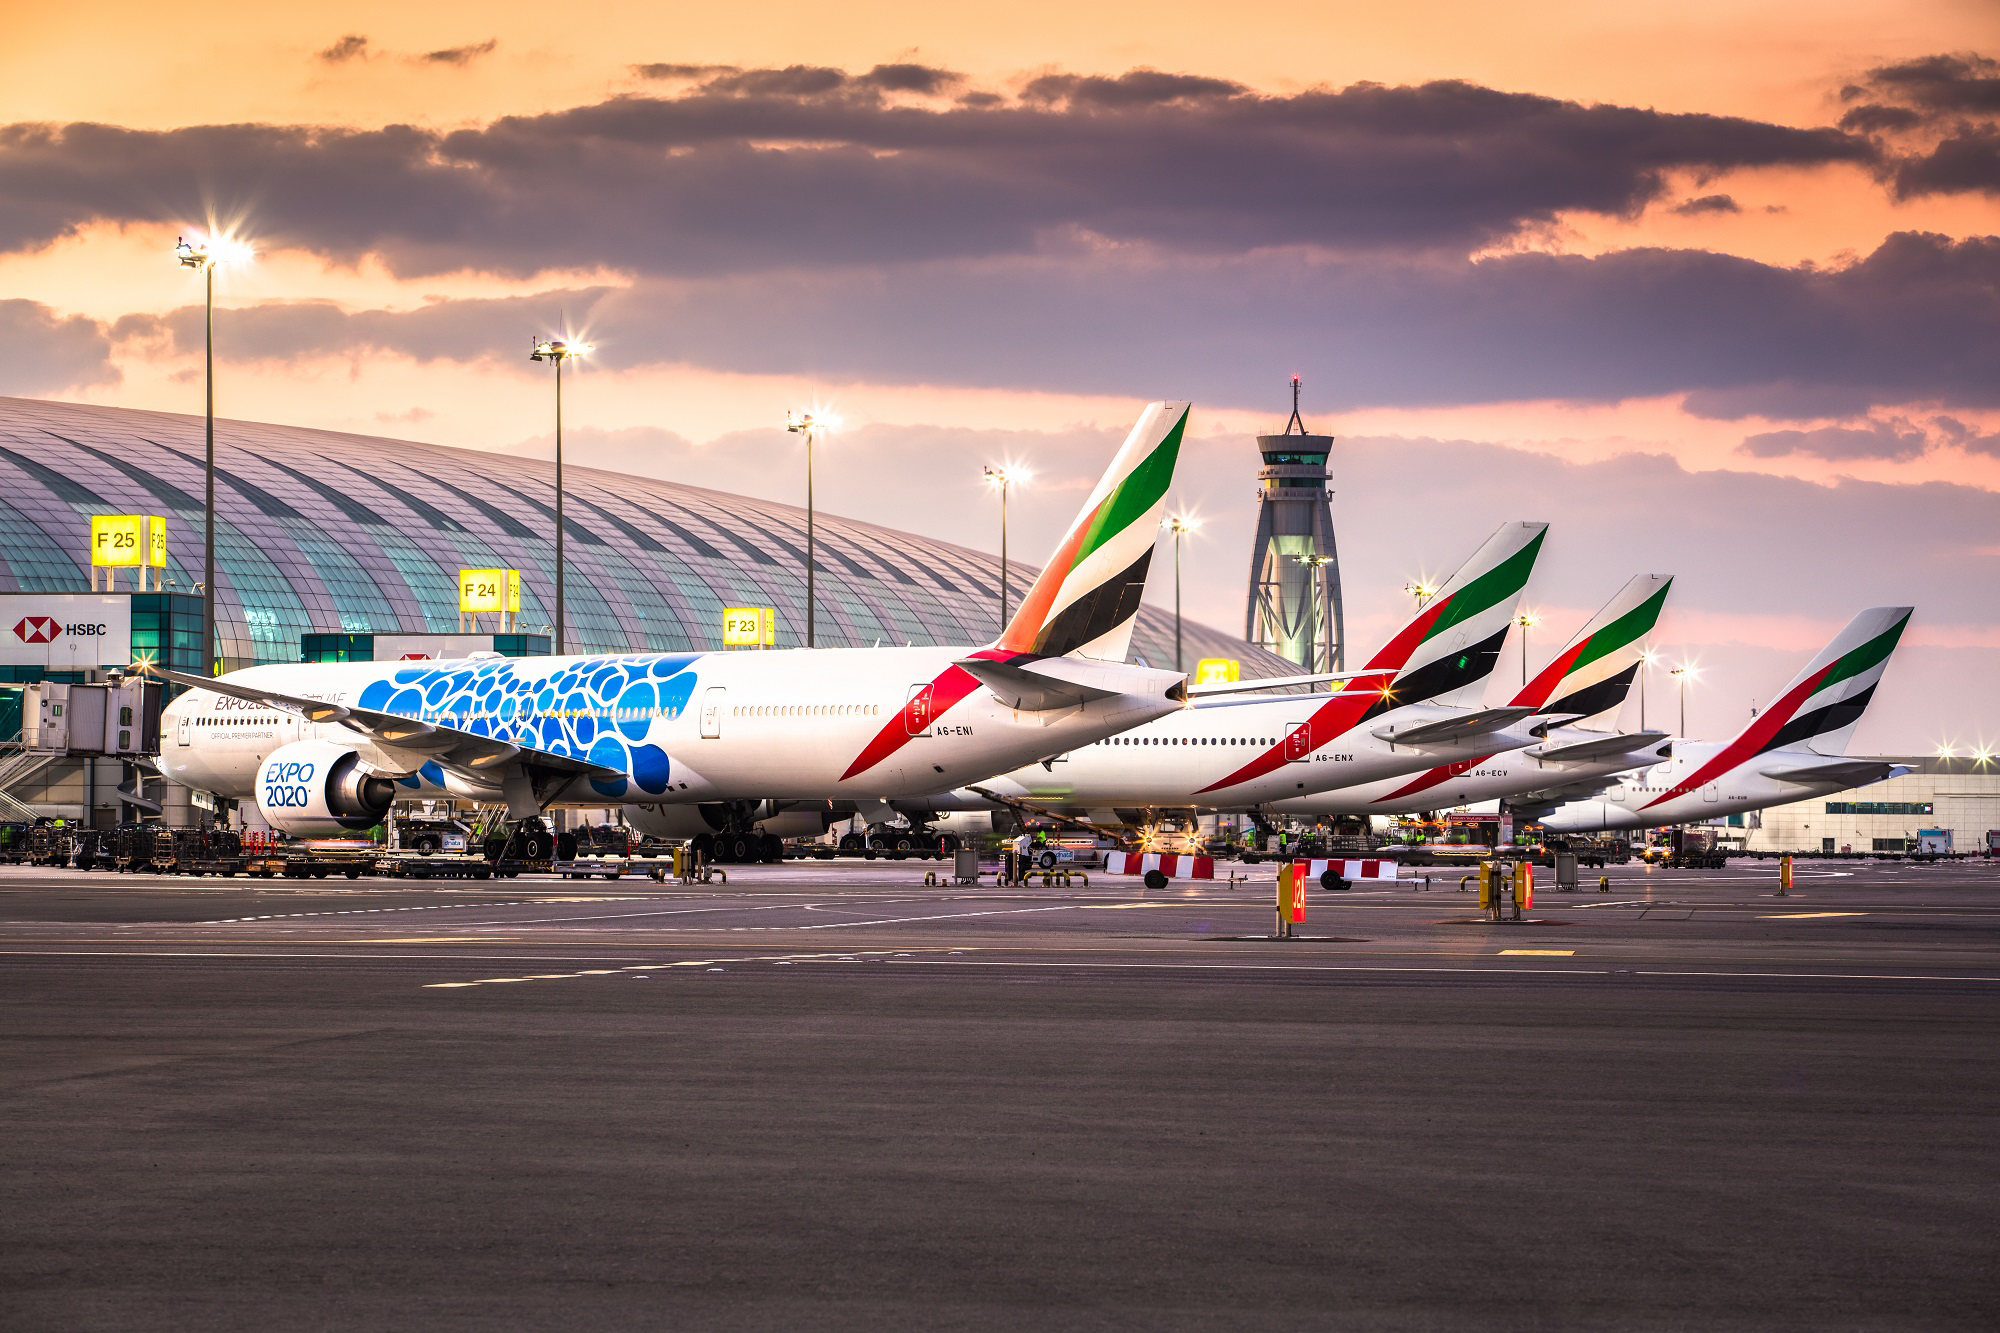 Сайт эмирейтс. Авиакомпания Дубай Эмирейтс. Самолет Дубай Эмирейтс. Дубайская авиакомпания Emirates. Авиалинии Дубай Эмирейтс самолеты.